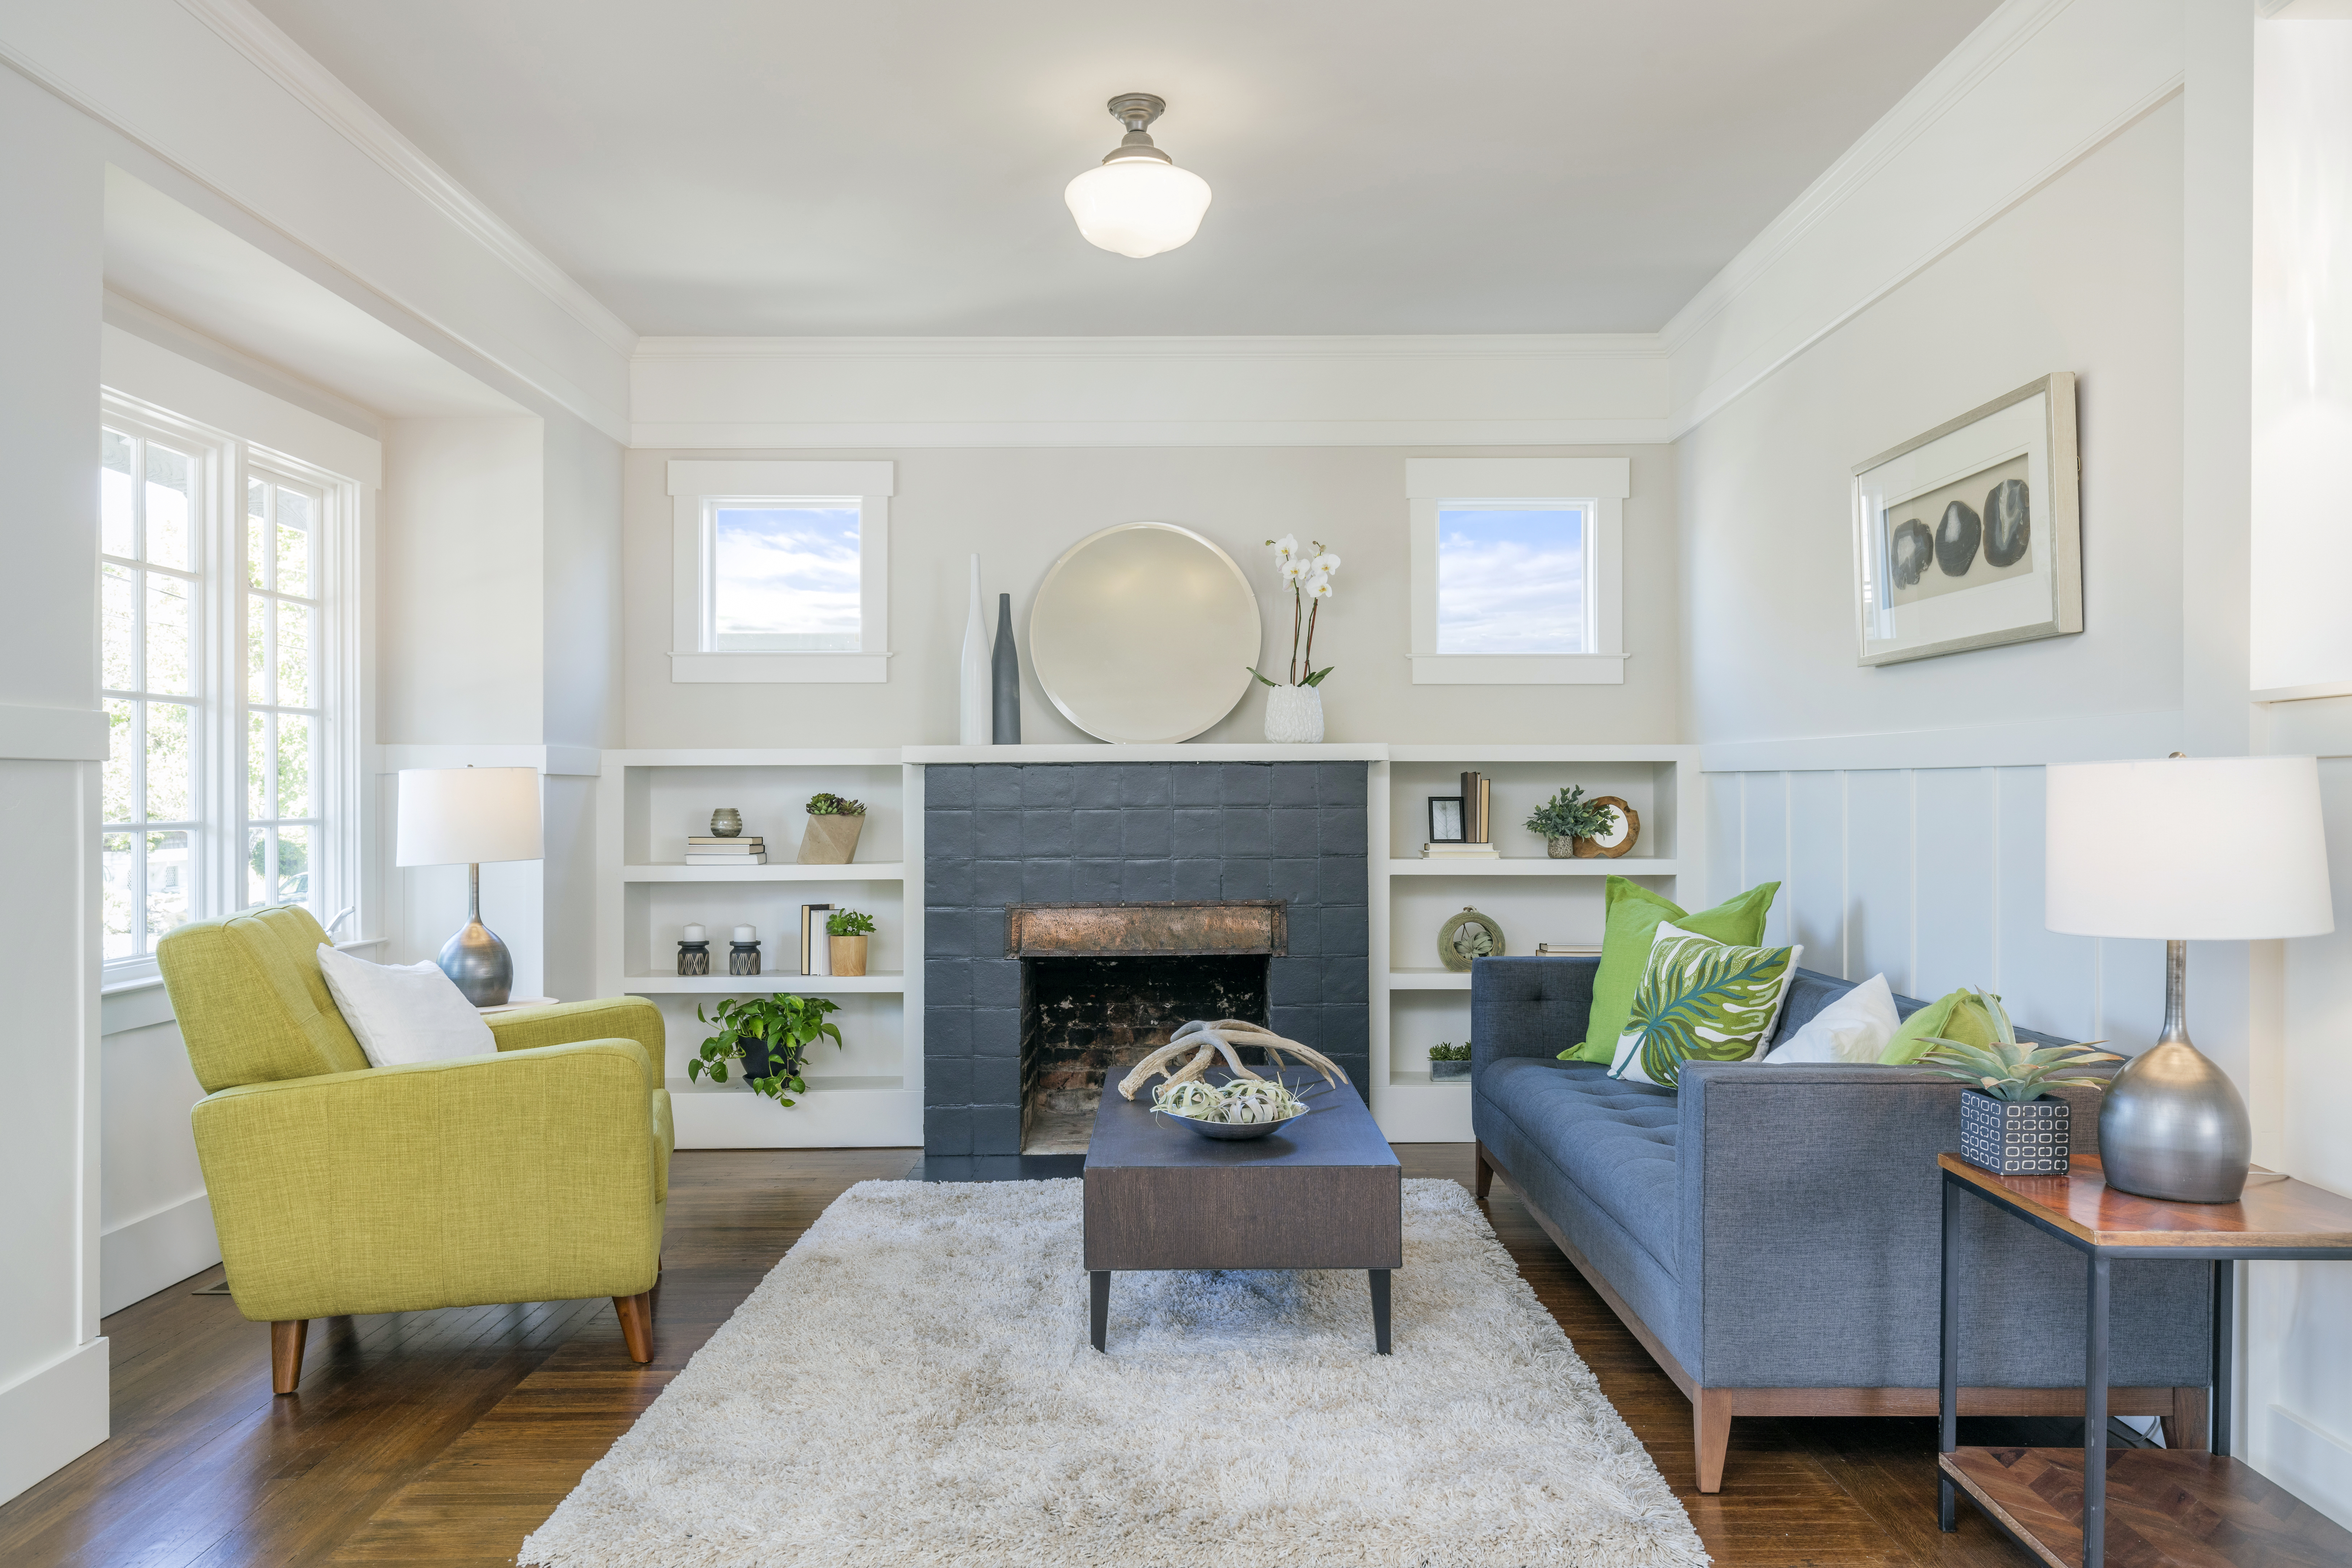 Living room | Source: Shutterstock